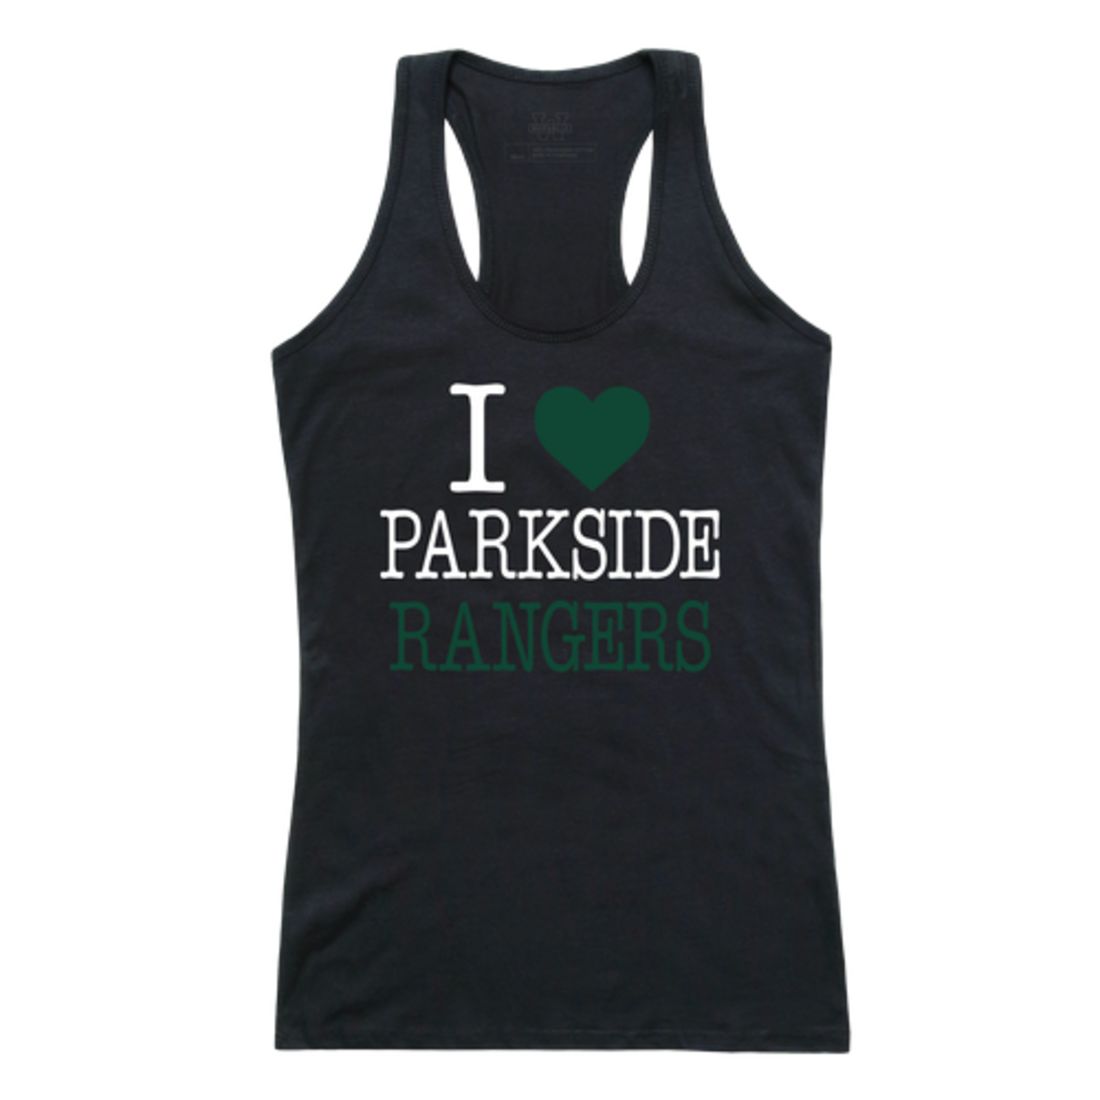 I Love University of Wisconsin Parkside Rangers Womens Tank Top